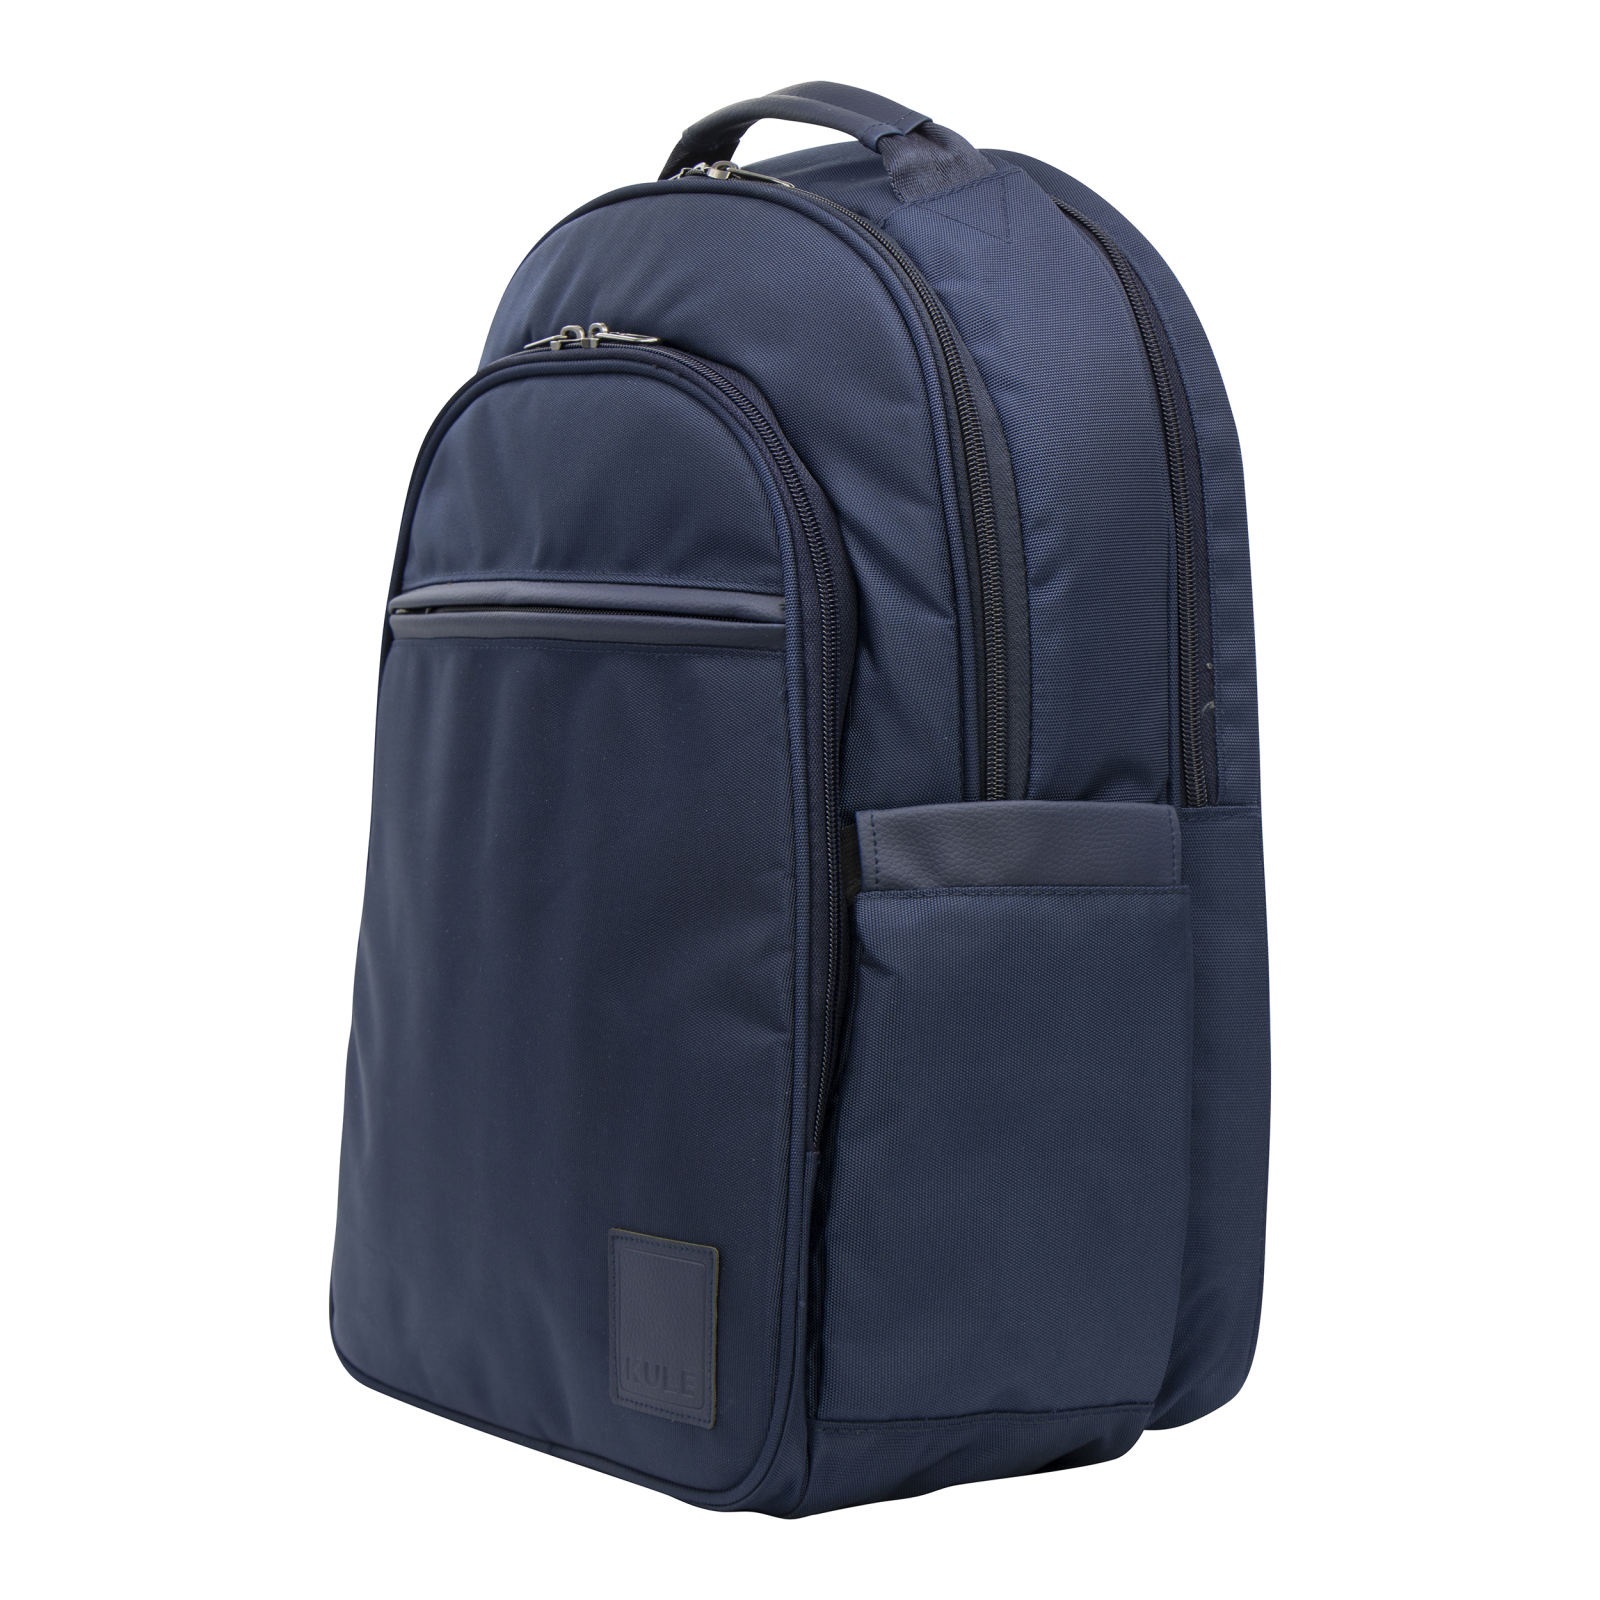 KULE KL1501 PRO laptop Backpack For 15.6 Inch Laptop